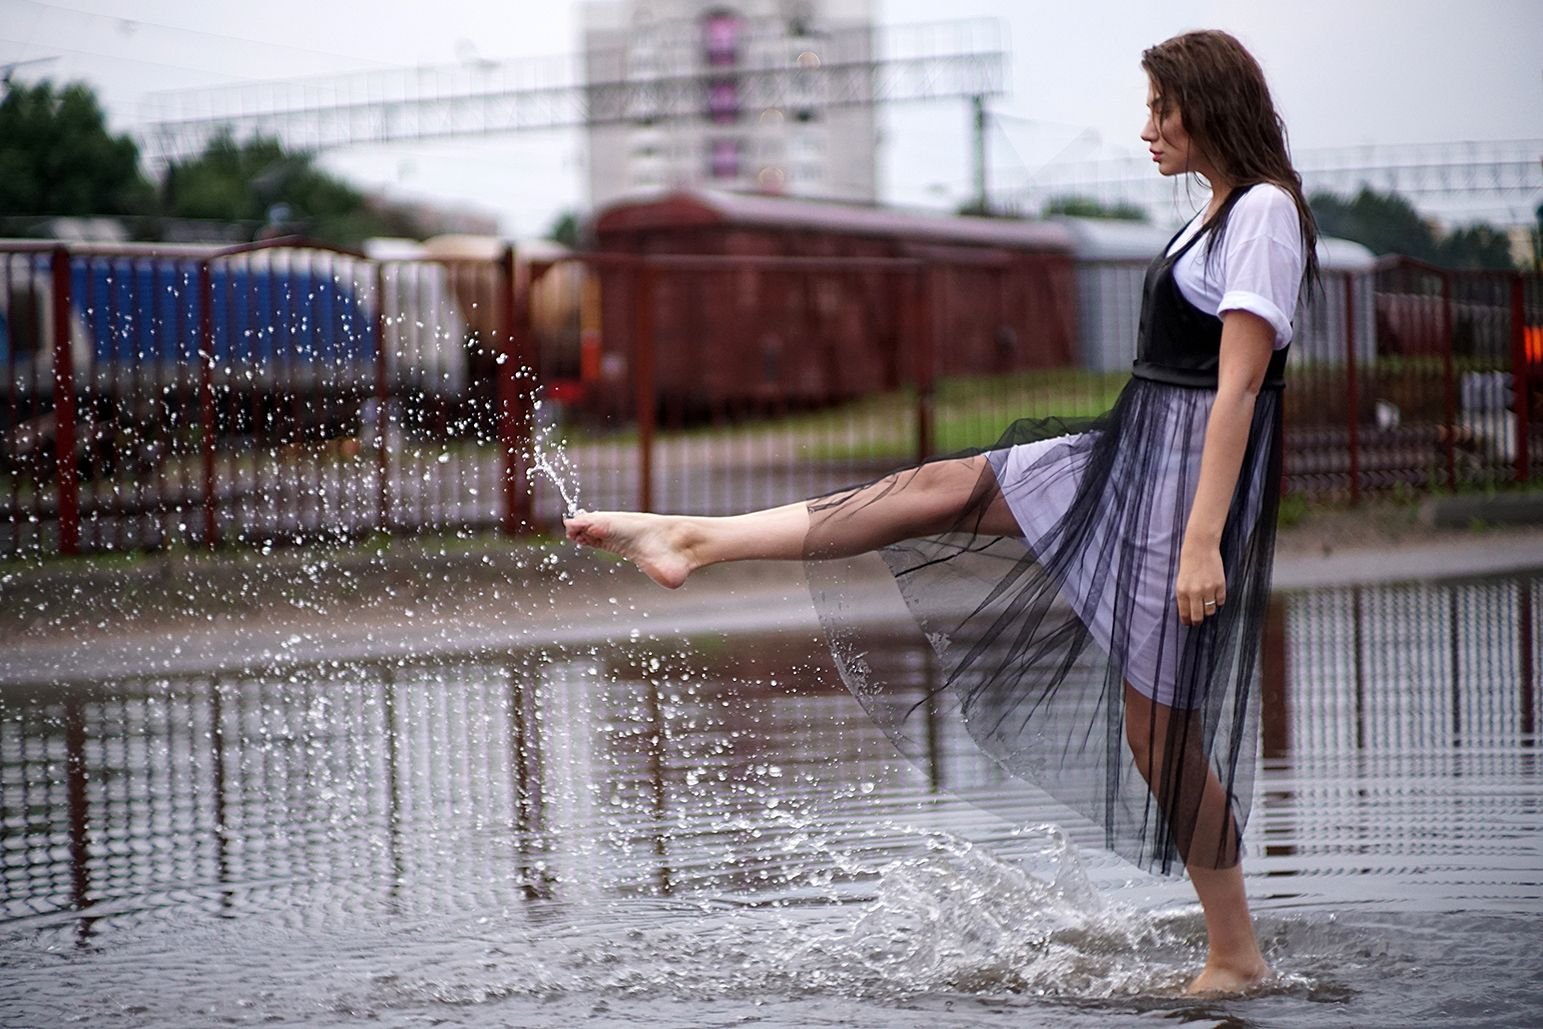 Дождь без перерыва. Девушка под дождем. Девушка под дождем в городе. Девушка дождь. Девушка в платье под дождем.